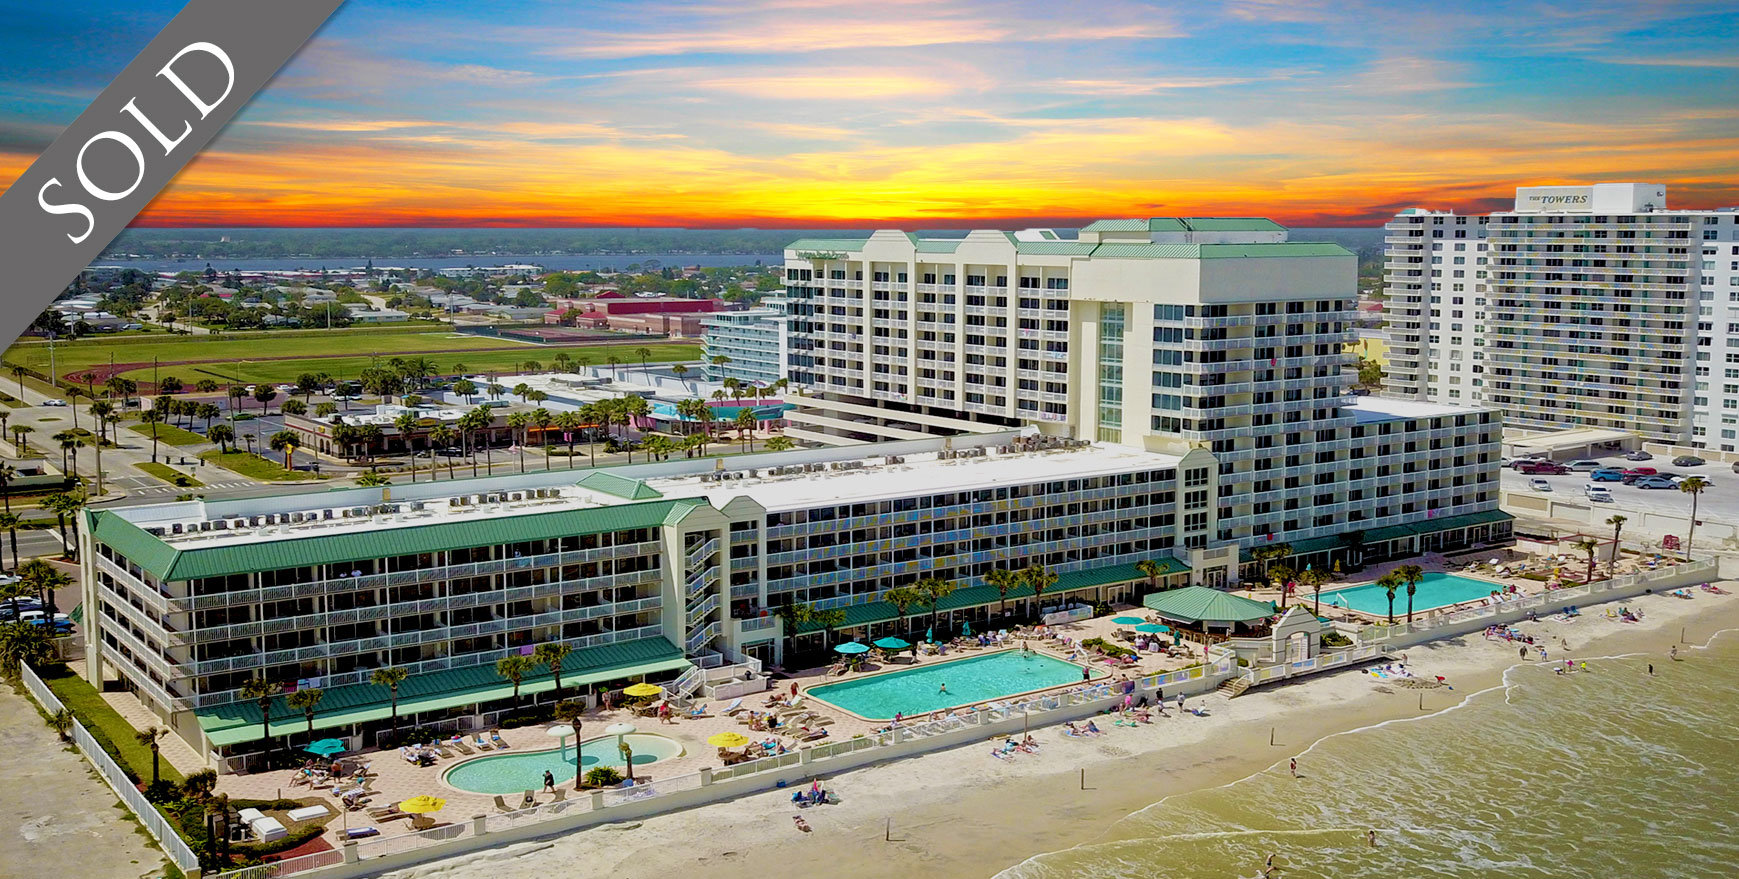 Sold Daytona Beach Resort oceanfront condos For Sale at 2700 N Atlantic Ave Daytona Beach The LUXE Group 386-299-4043